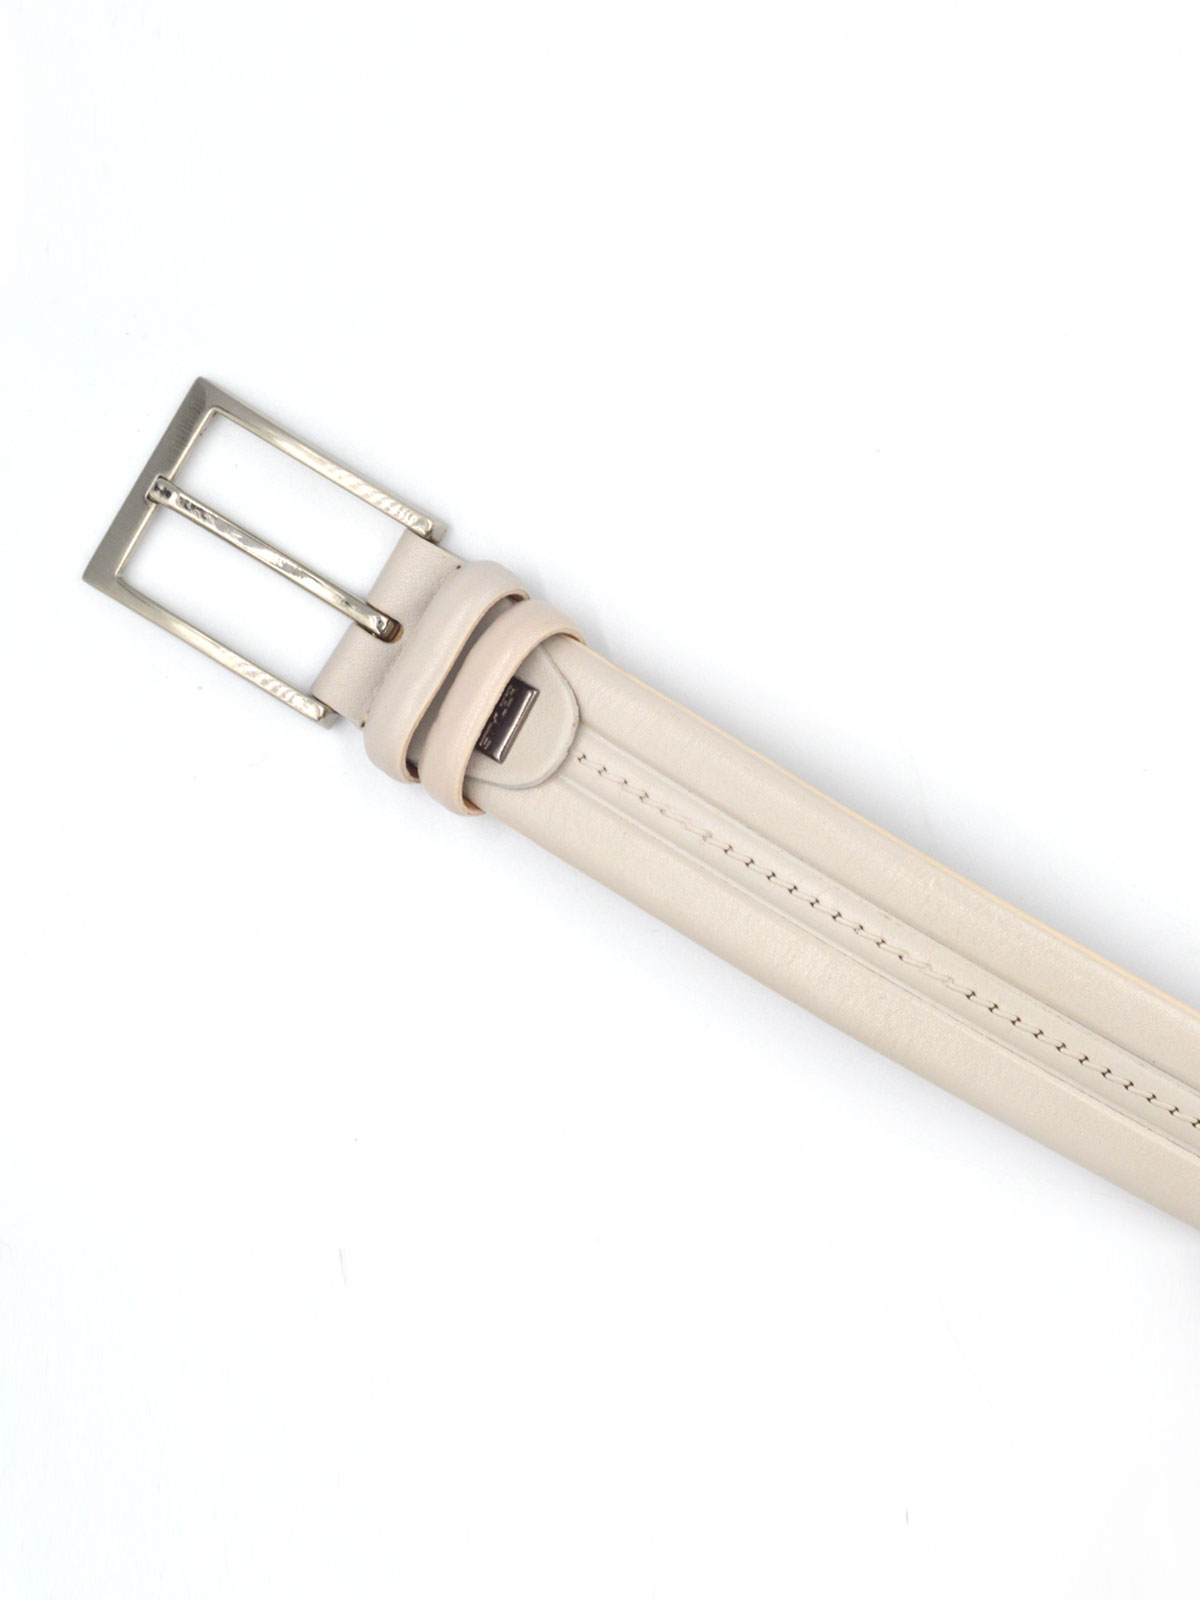 Mens leather belt in beige color - 10458 - € 24.75 img3